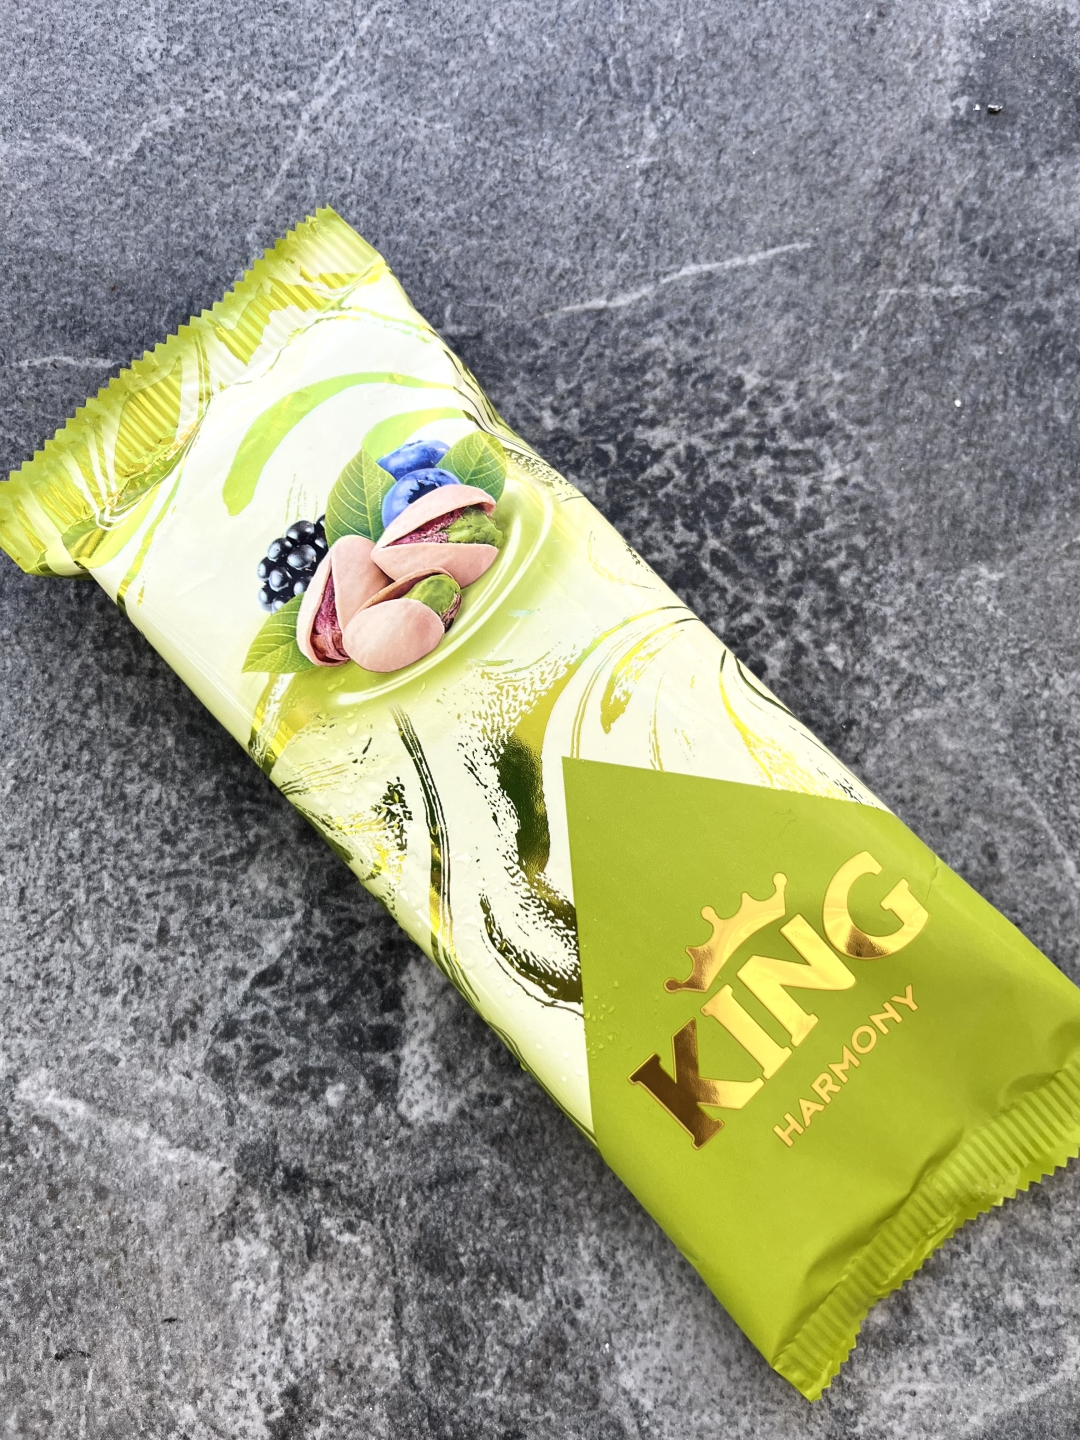 Stigao je novi King sladoled – odmah smo ga morali probati